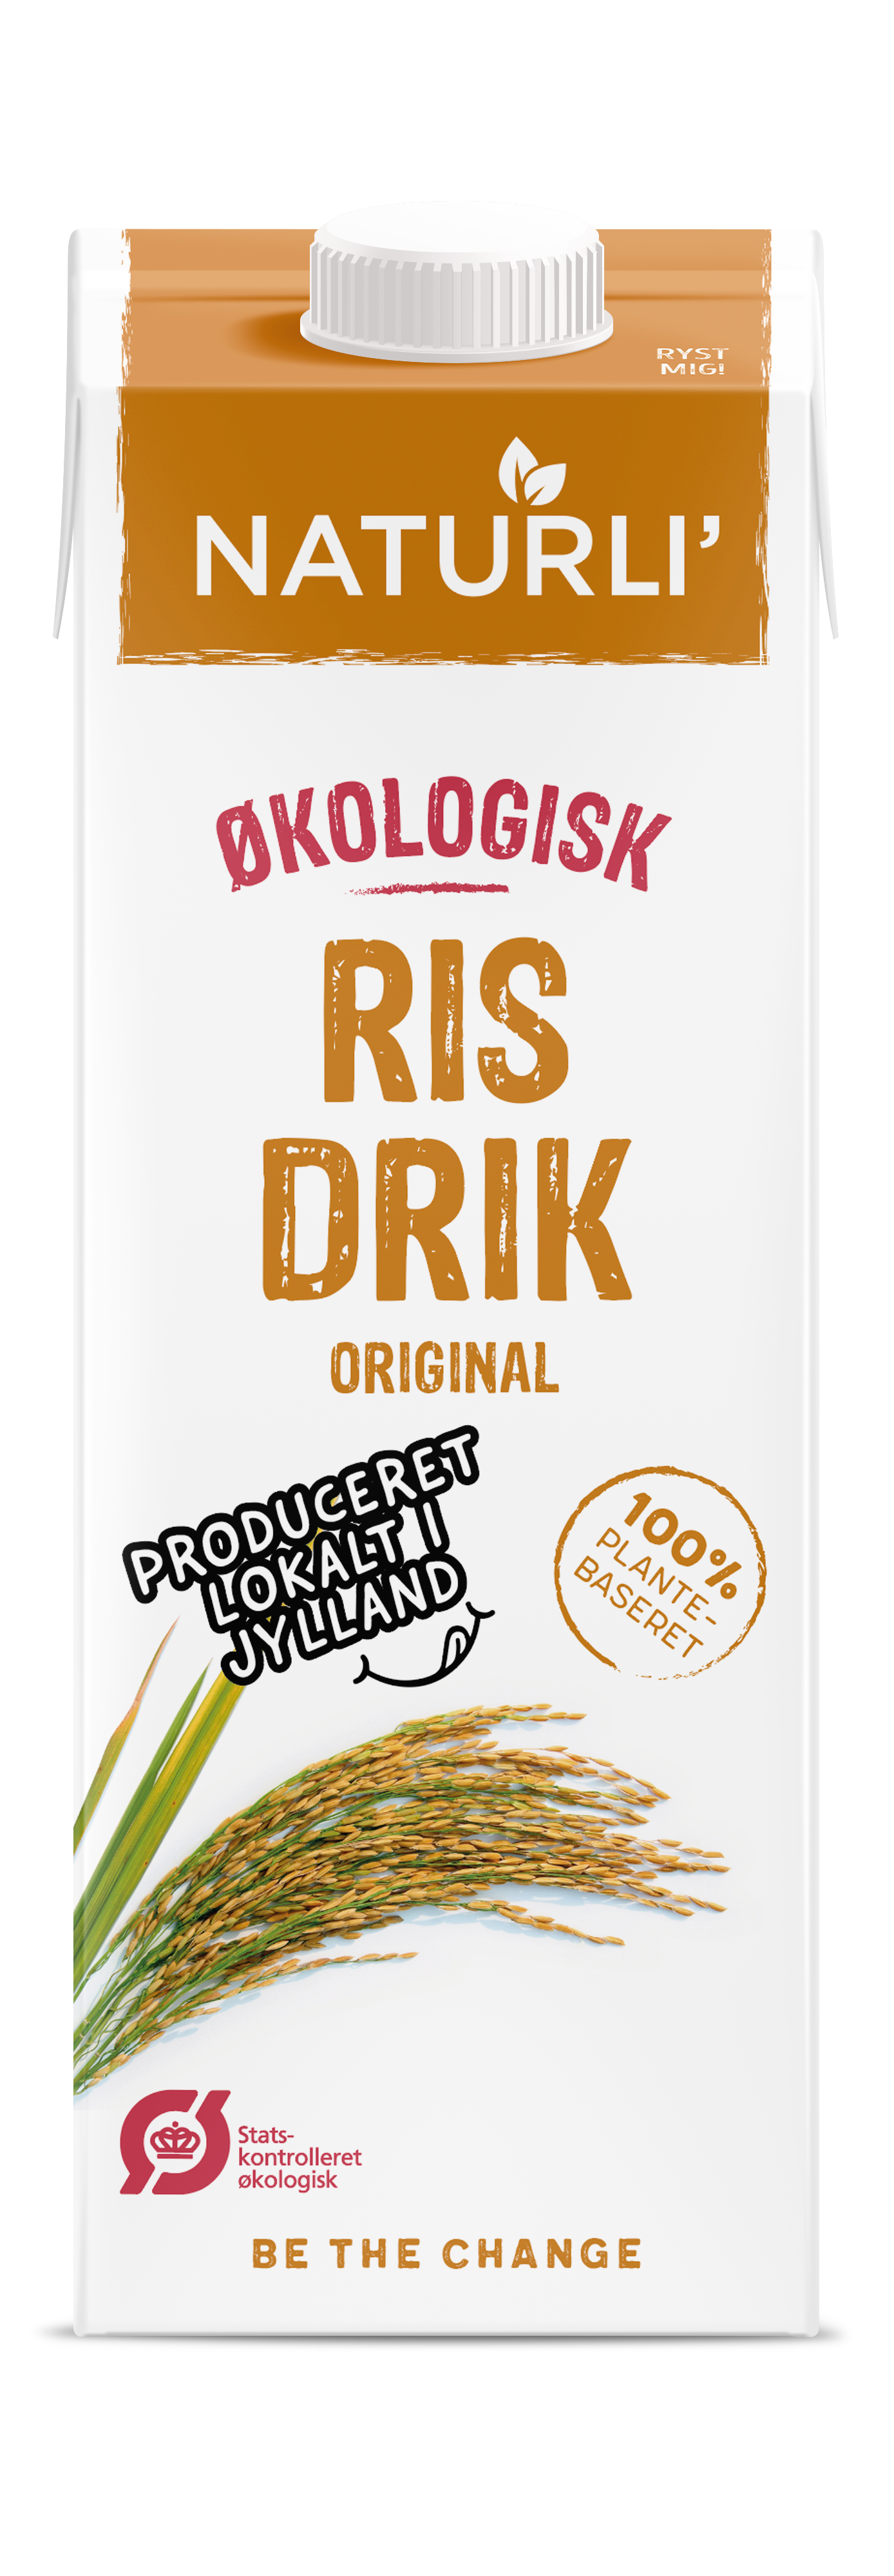 Naturli Ris Drik Original Økologisk